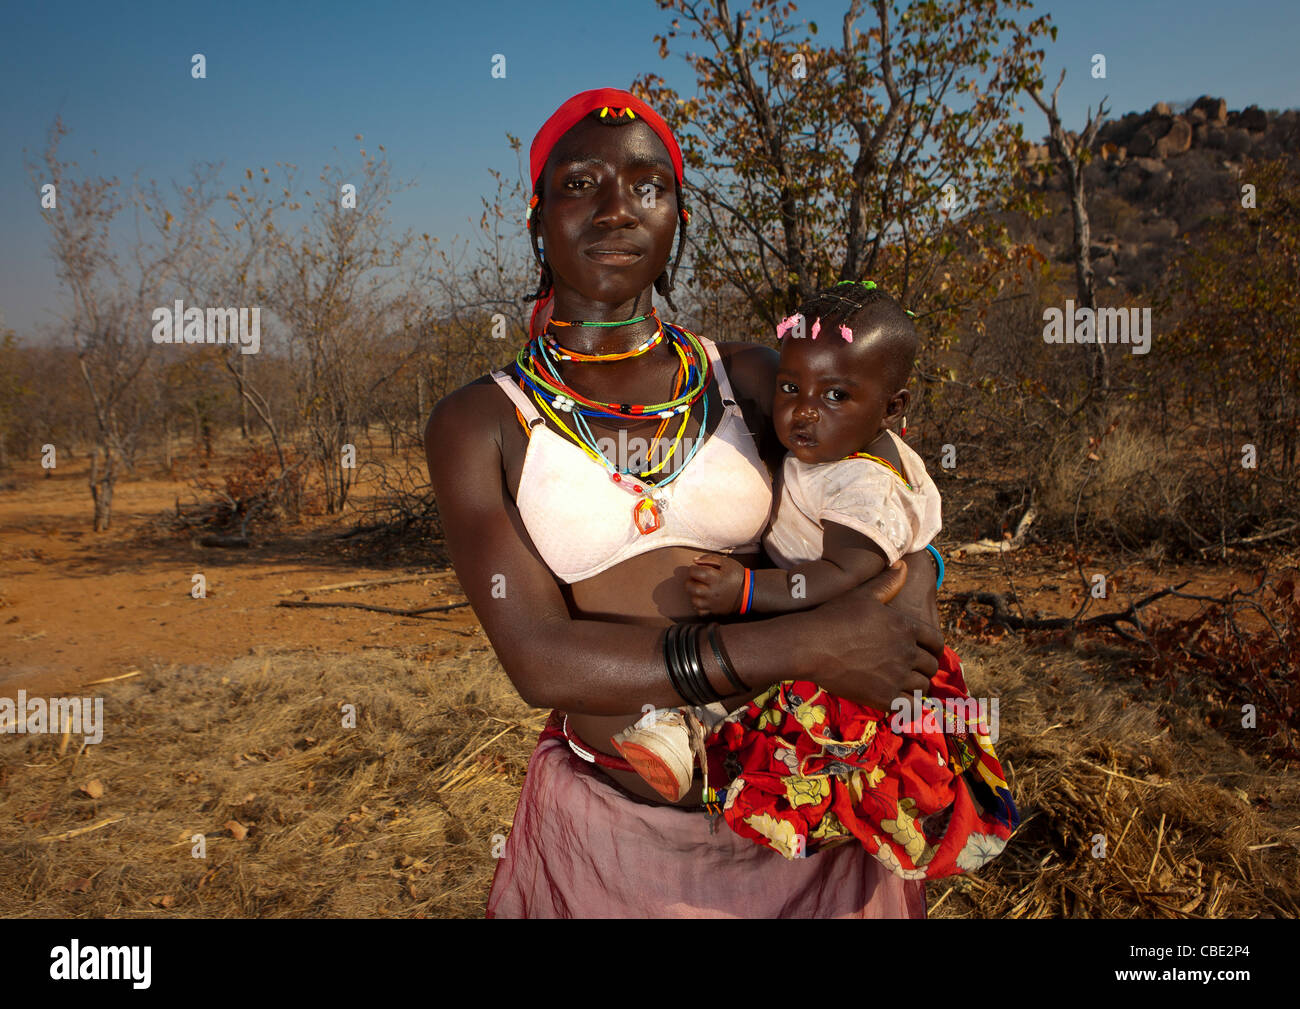 https://c8.alamy.com/comp/CBE2P4/mudimba-woman-wearing-a-bra-holding-her-baby-village-of-combelo-angola-CBE2P4.jpg